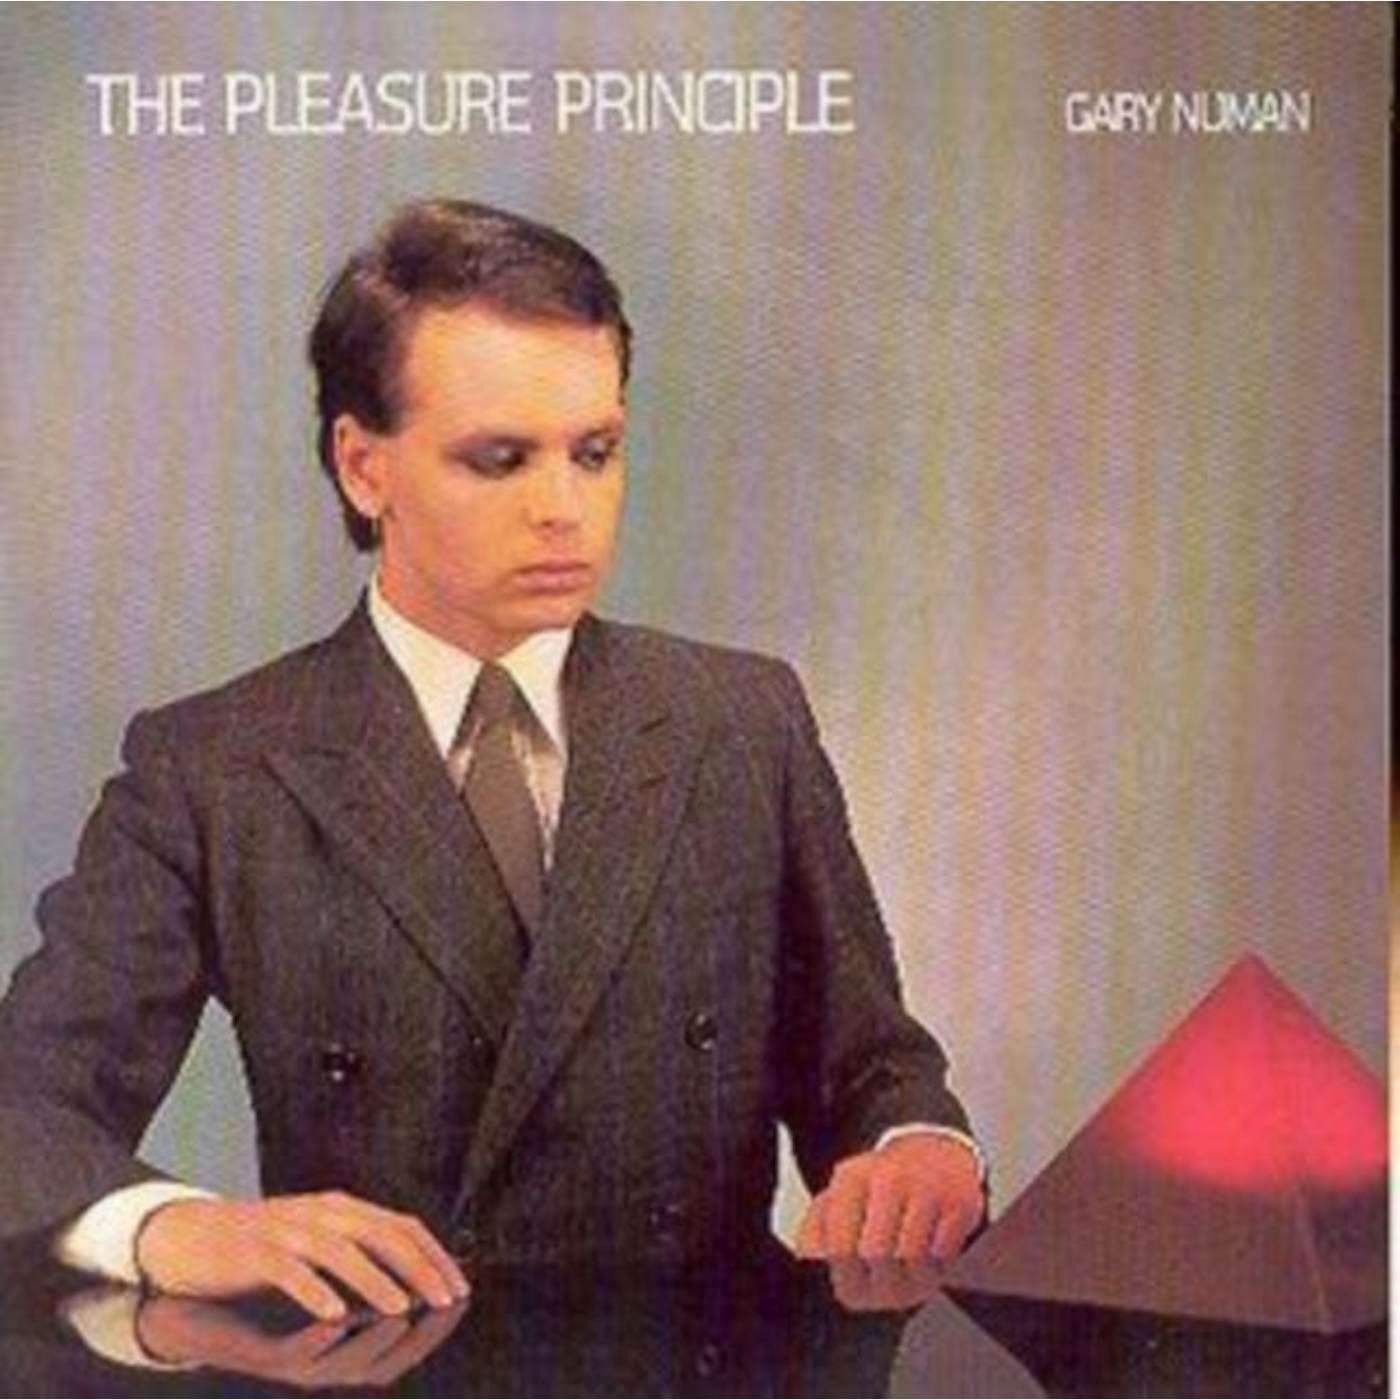 Gary Numan CD - The Pleasure Principle